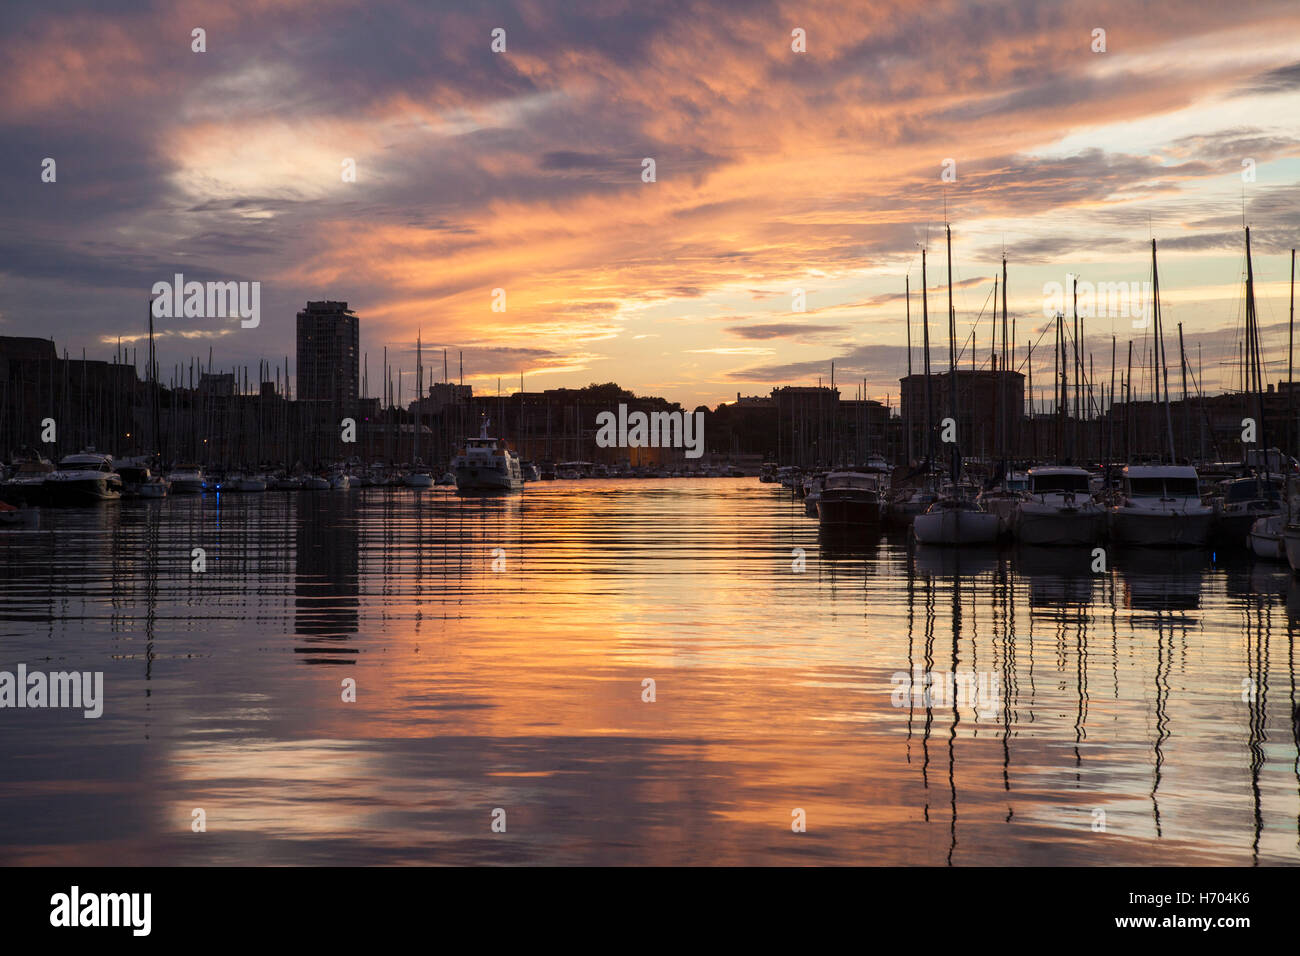 Vieux port at sunset, Marseille, France Stock Photo